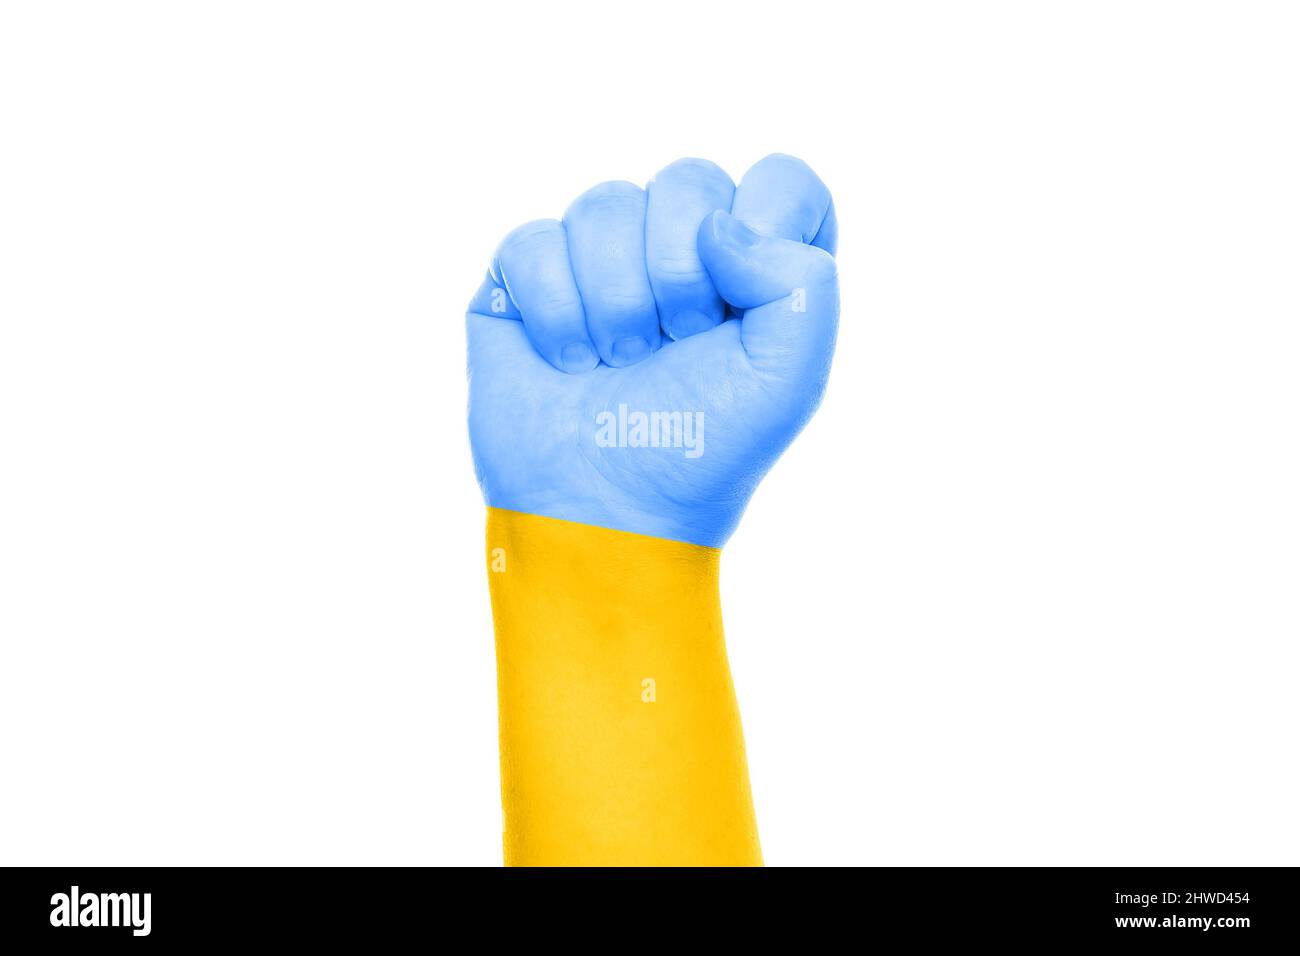 raised fist painted with flag of Ukraine Stock Photo